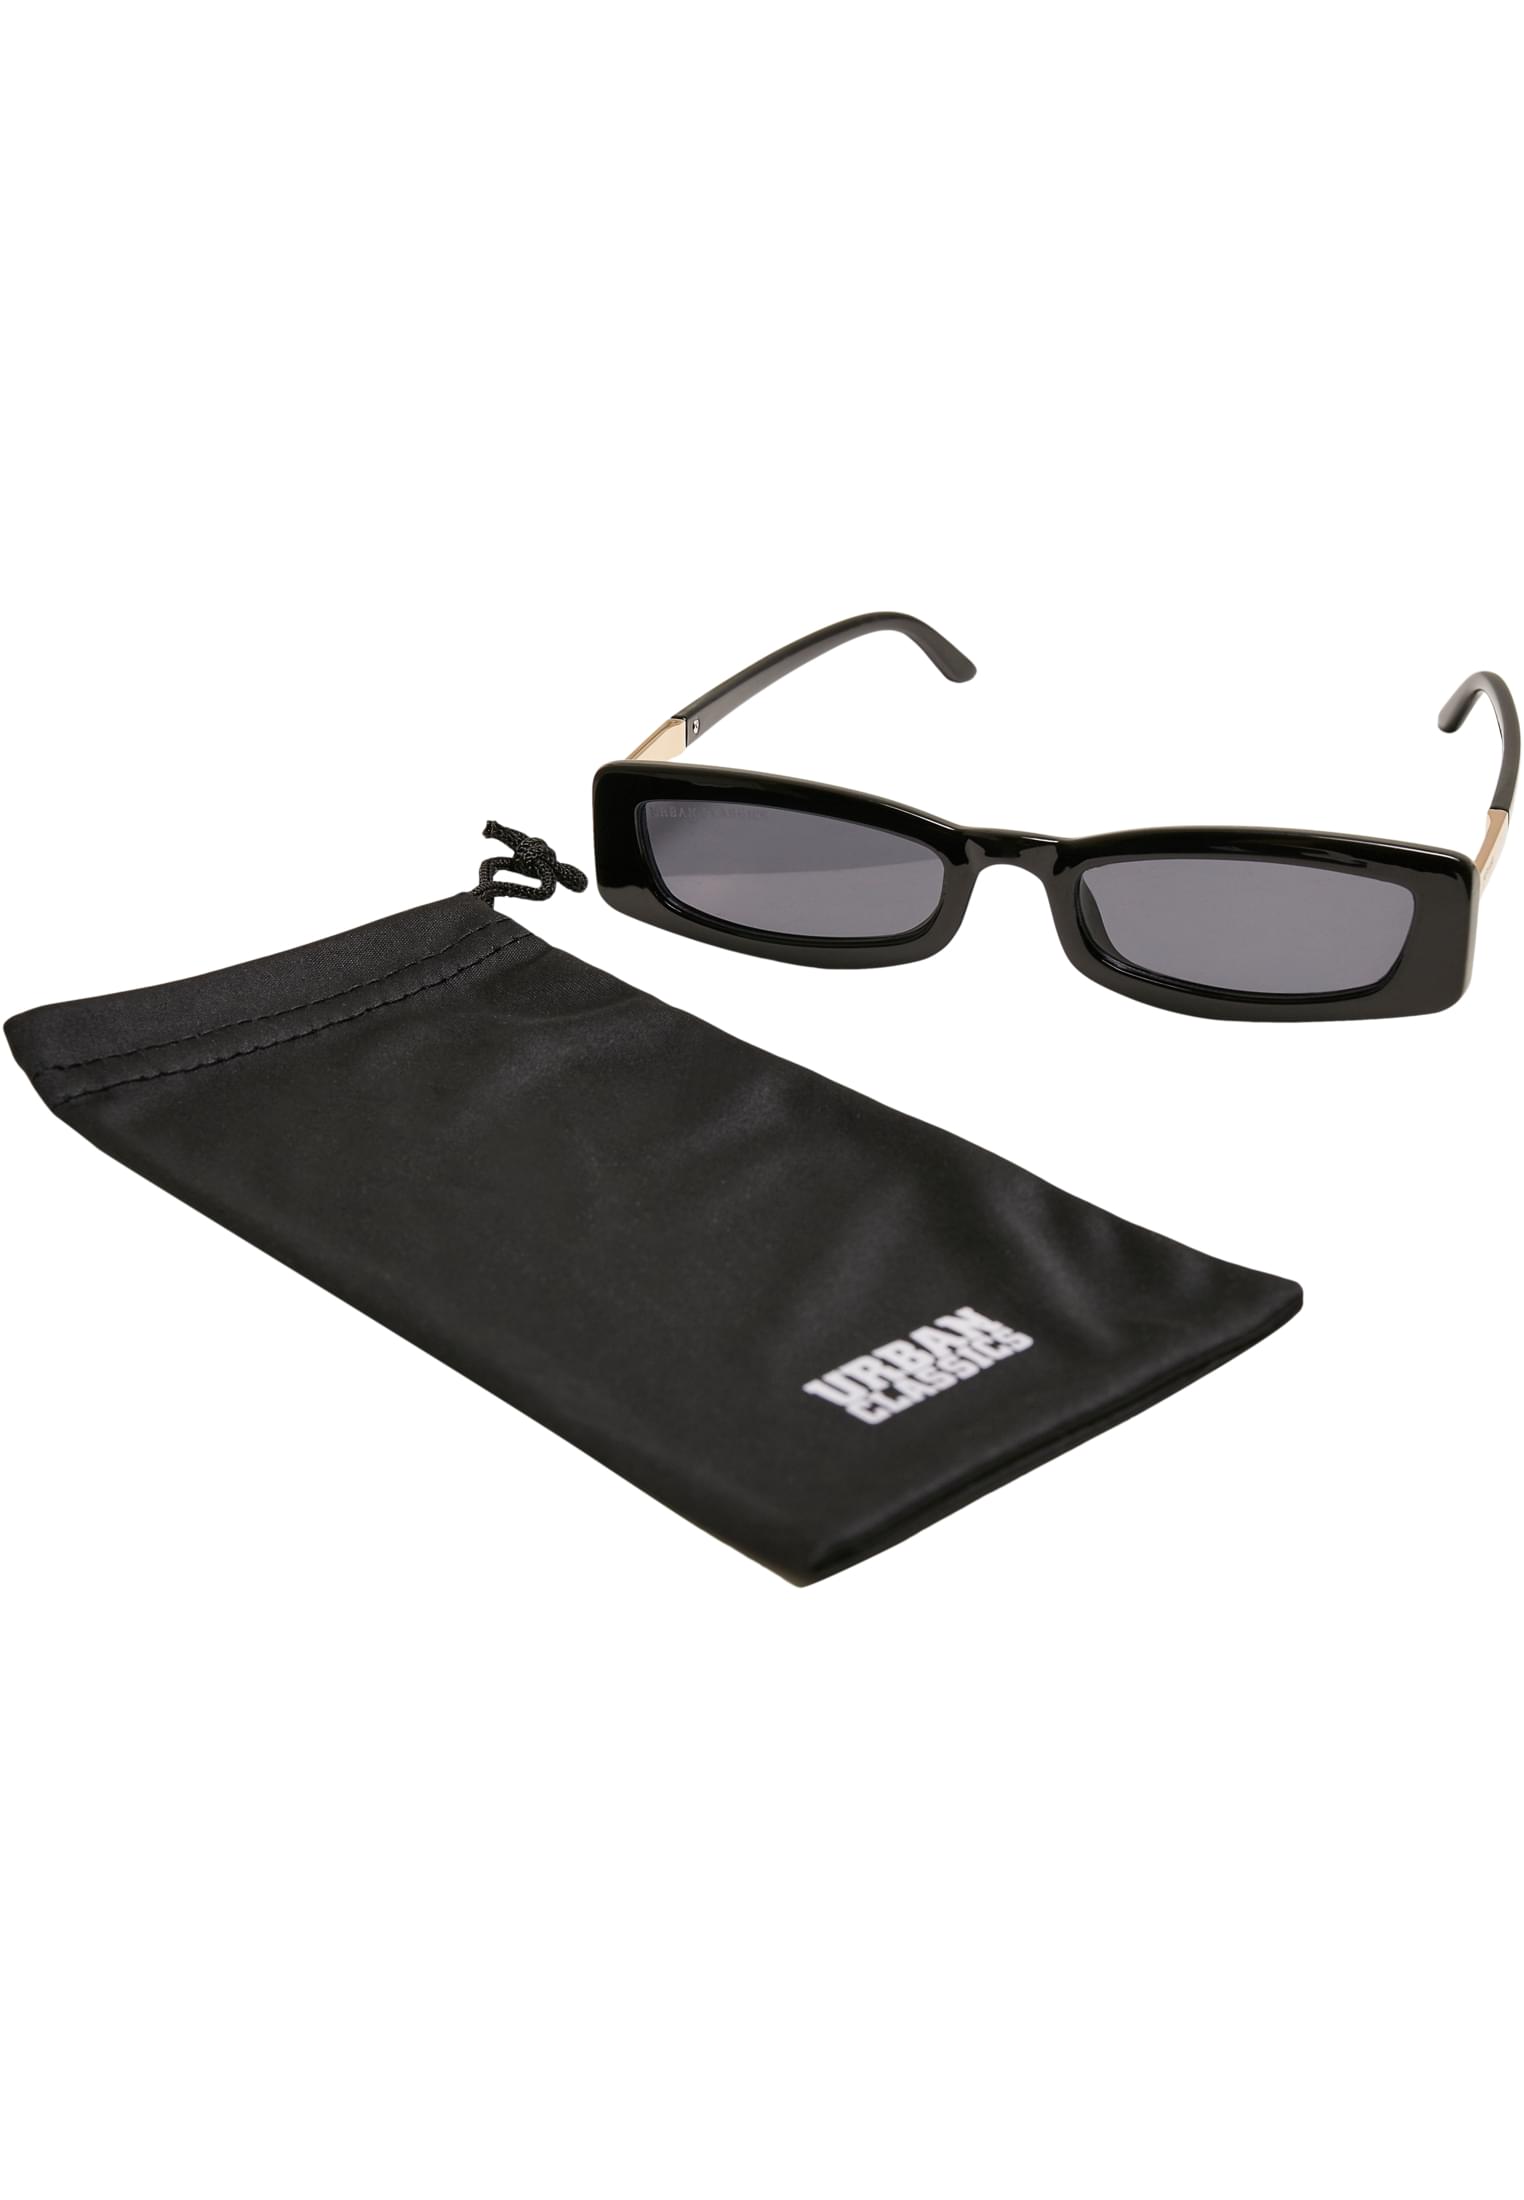 Sunglasses Minicoy black